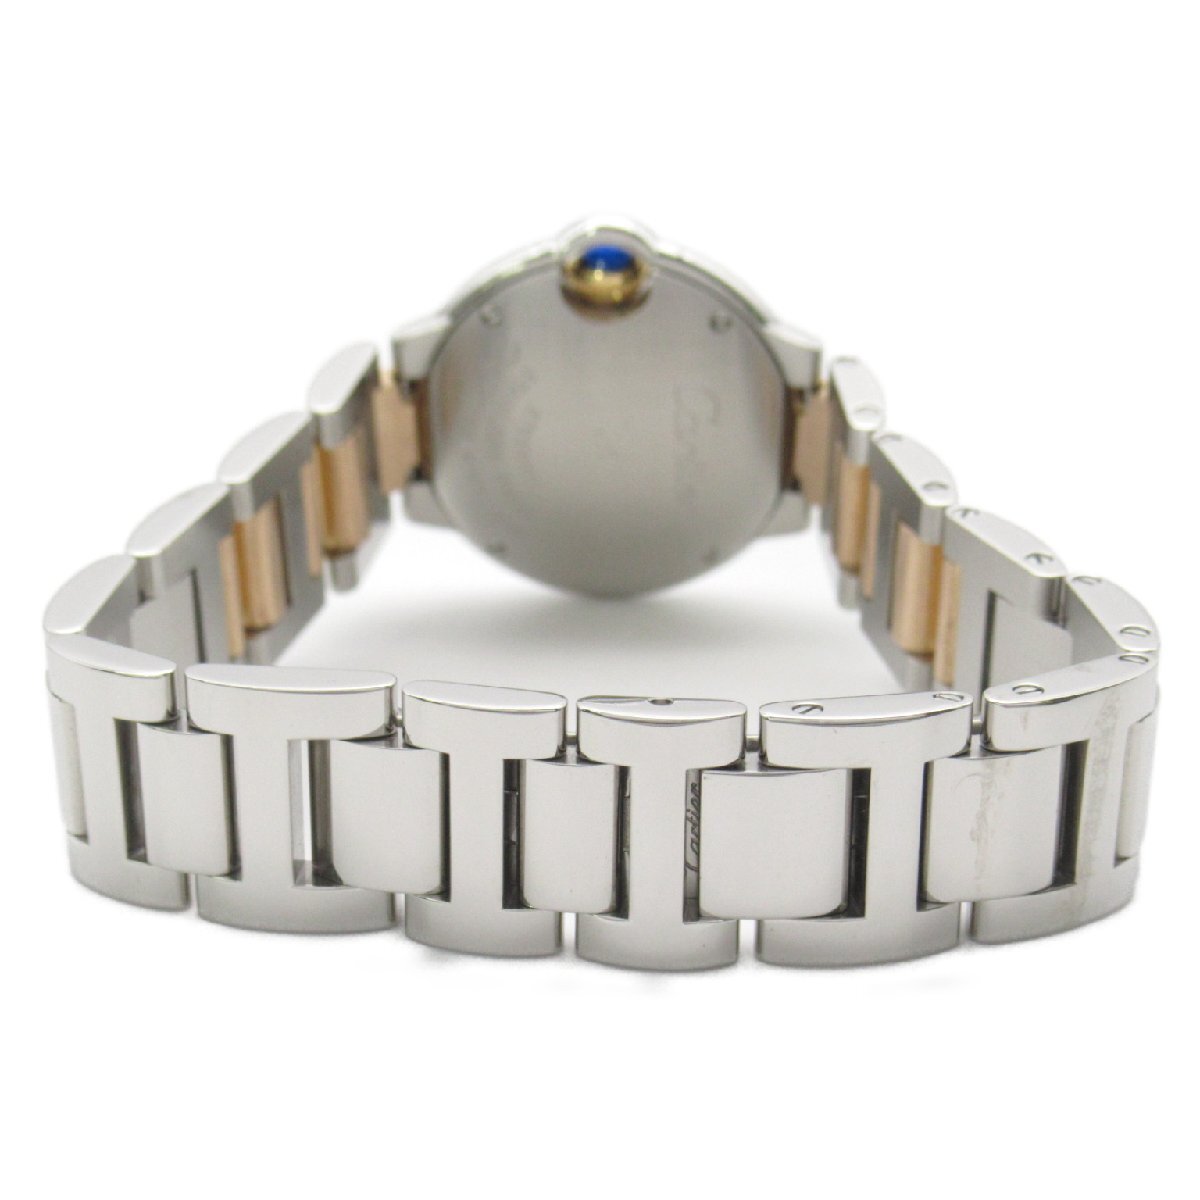  Cartier ba long blue SM wristwatch watch brand off CARTIER K18PG( pink gold ) wristwatch PG/SS used lady's 